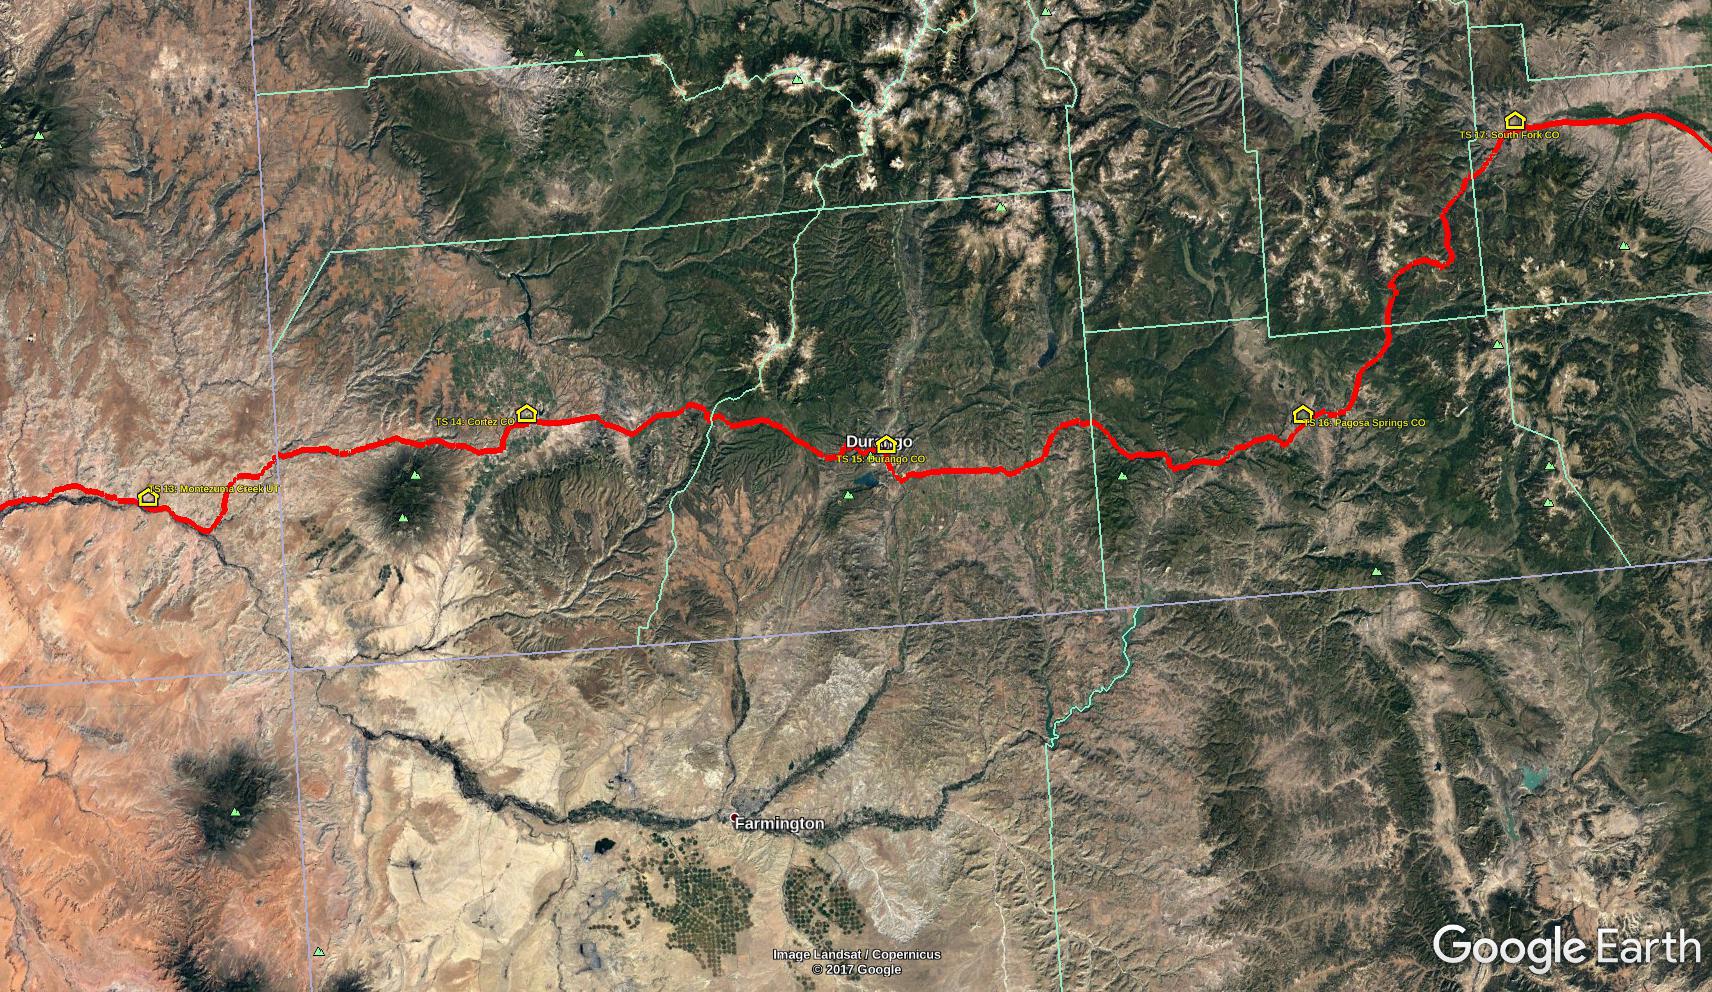 Durango on Google Earth